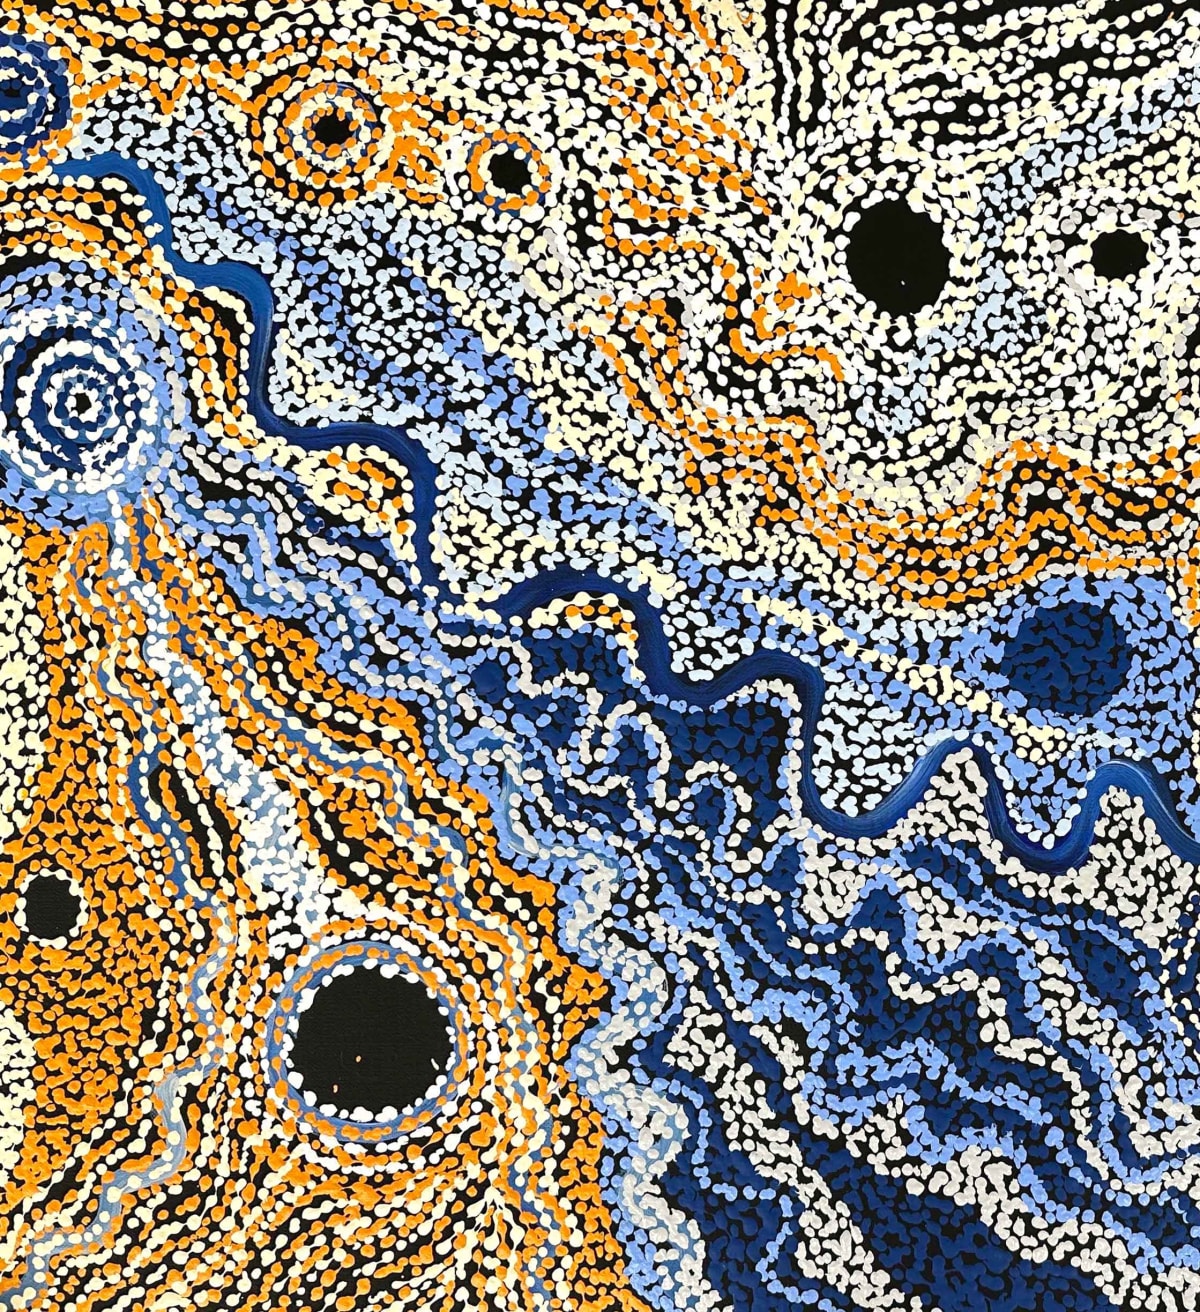 Art by leading Aboriginal artist Cindy Morton